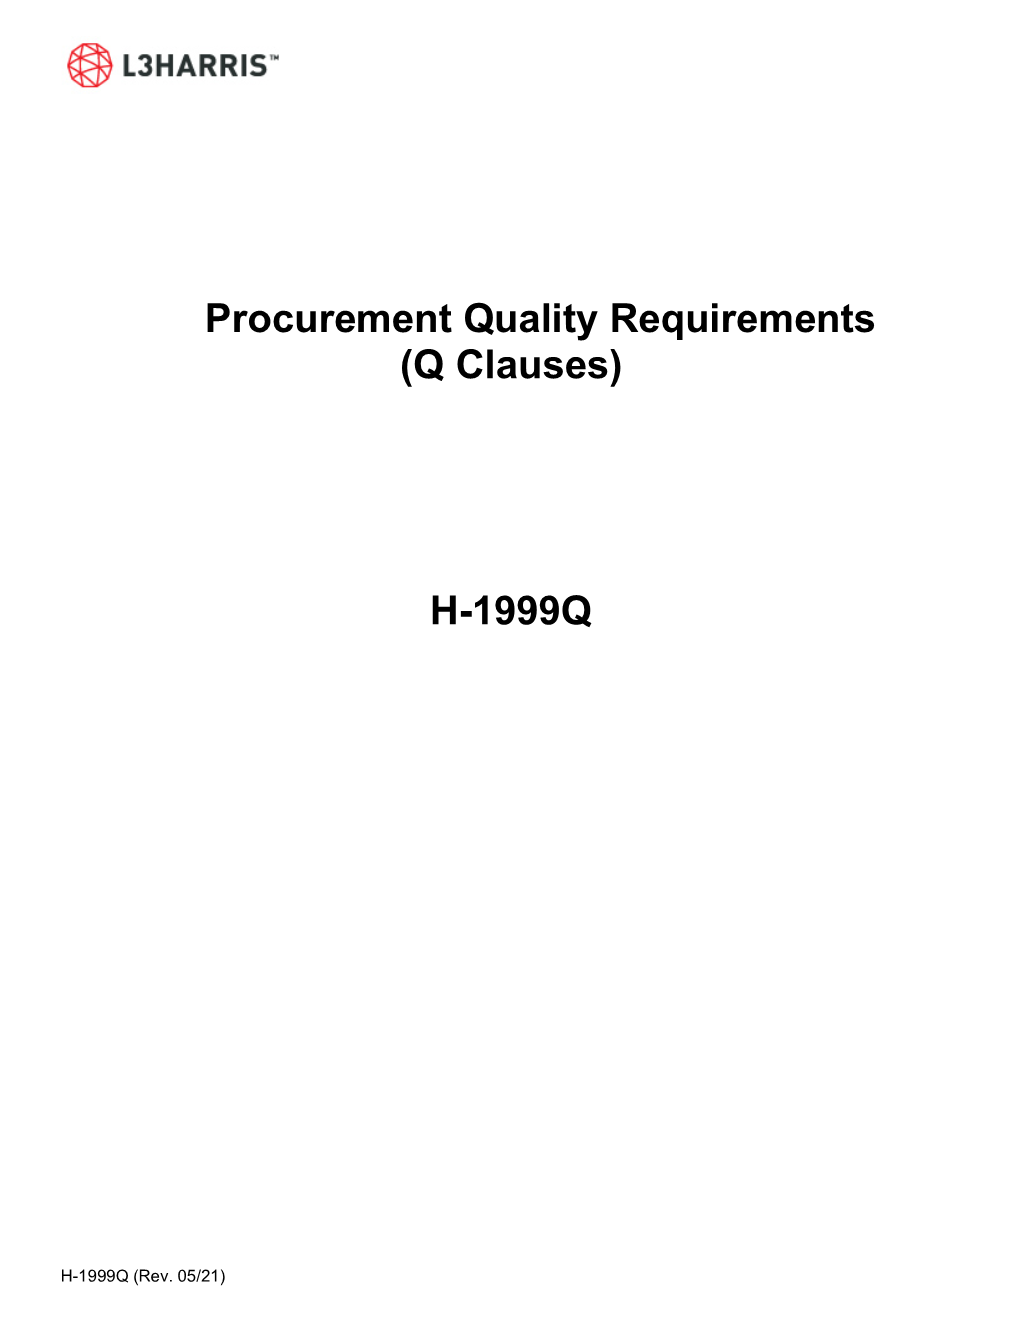 Procurement Quality Requirements (Q Clauses) H-1999Q